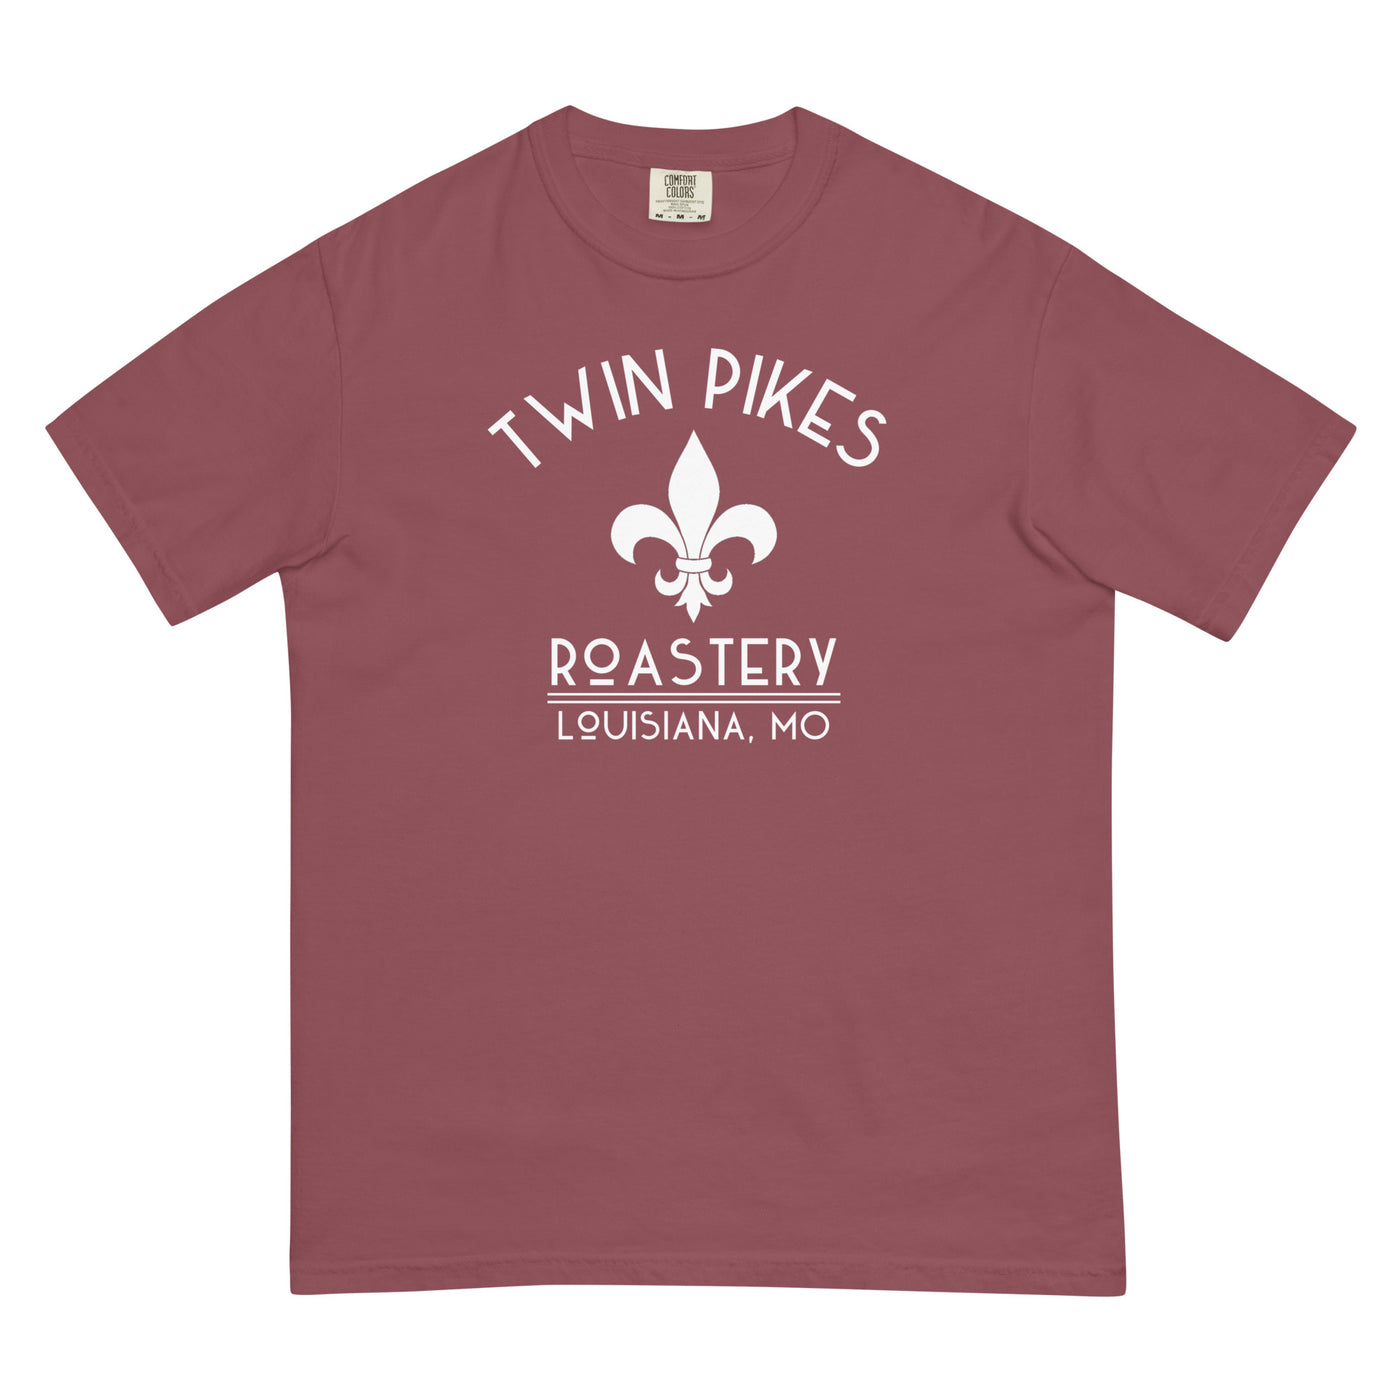 Garment-dyed heavyweight t-shirt Louisiana -  Twin Pikes Roastery